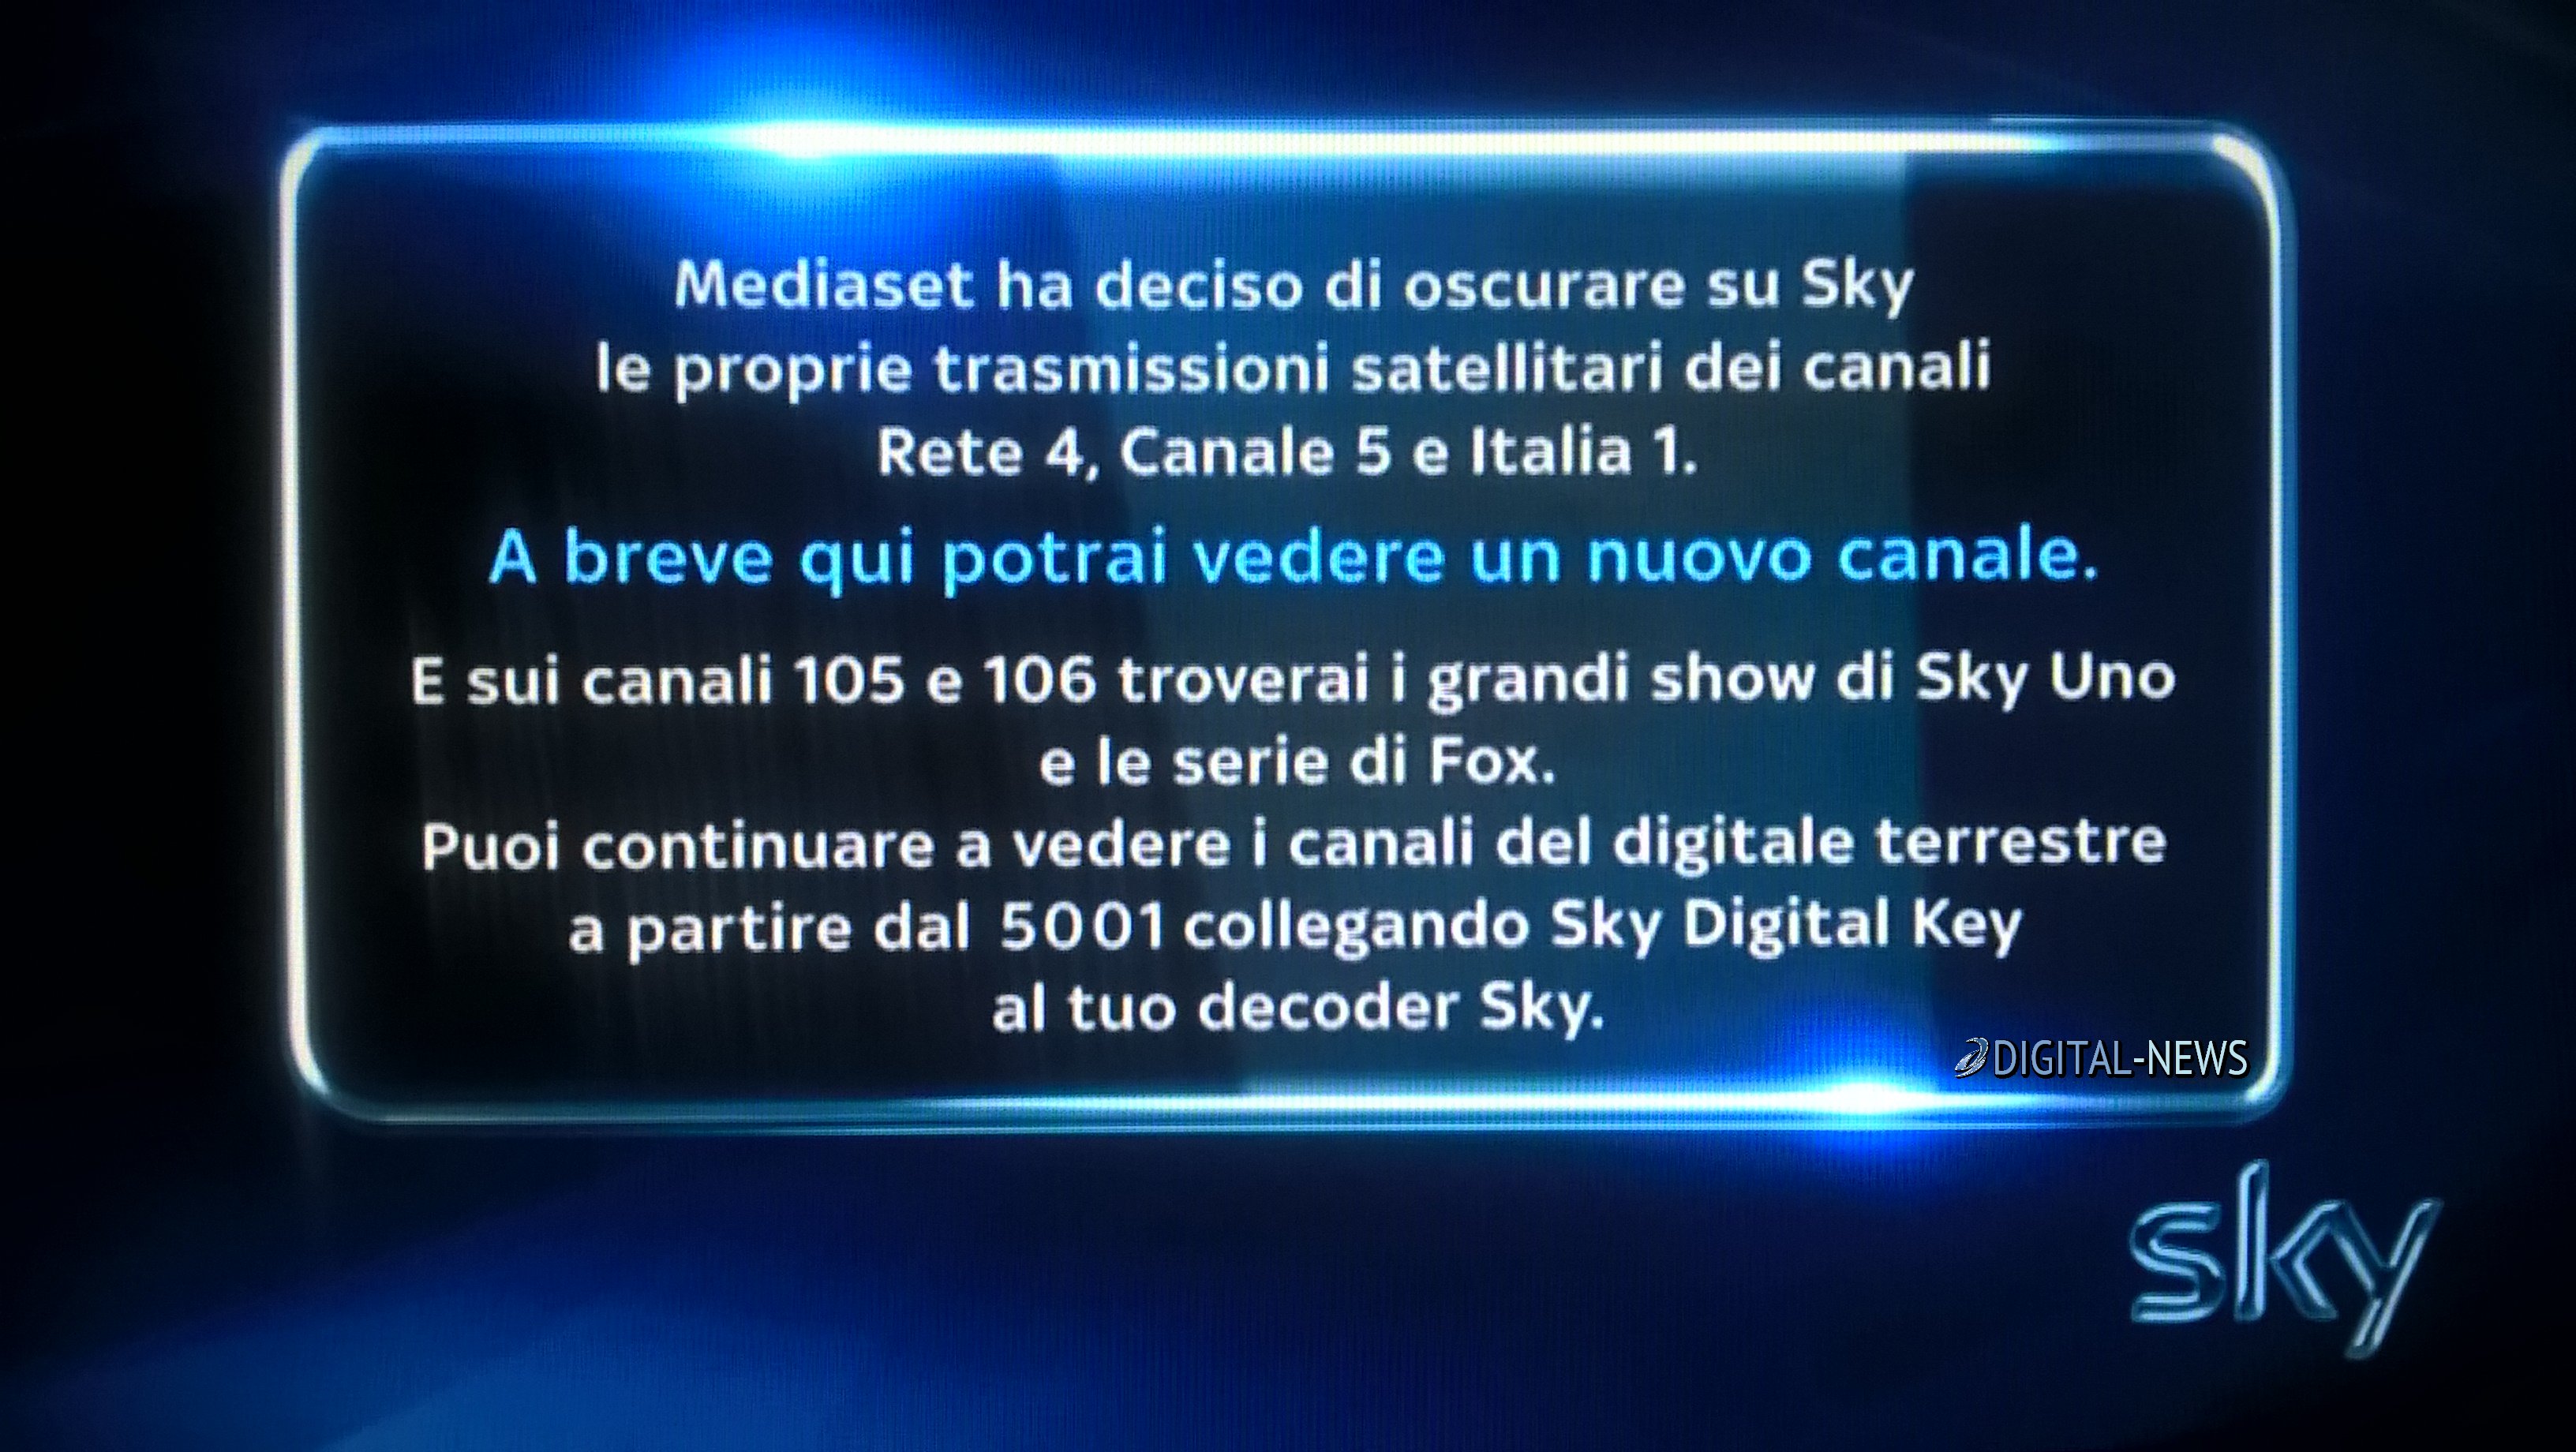 Mediaset cita Sky per danni: "Paghi per aver trasmesso i nostri canali" (Repubblica)